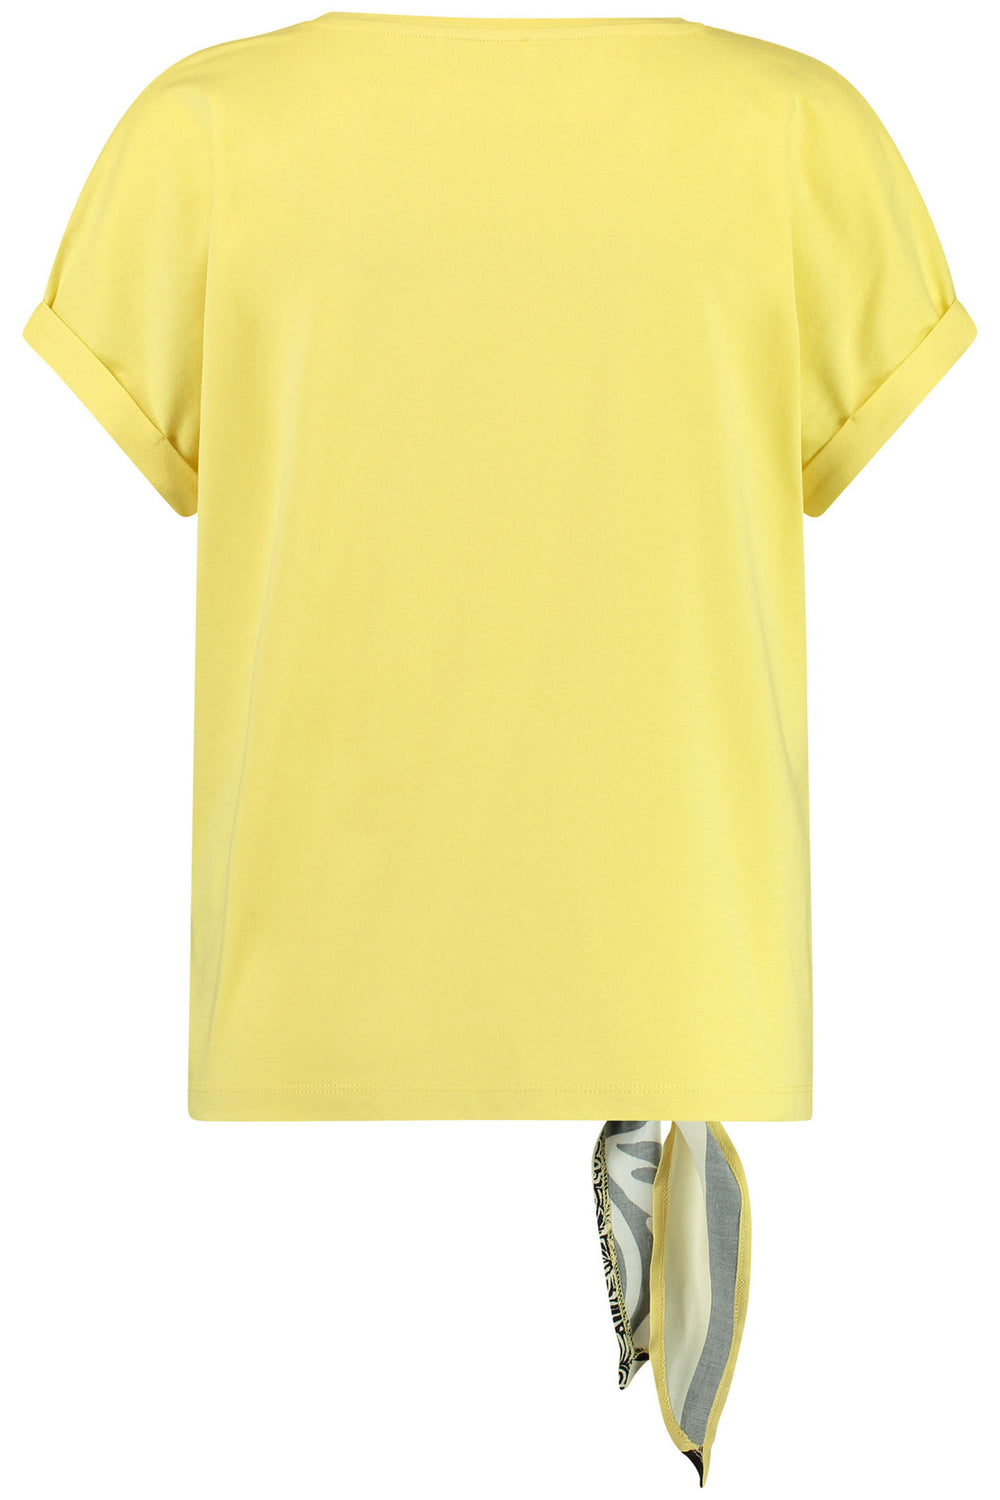 Gerry Weber 370272 Bleached Sun Lime Flower Print Tie-Waist Top - Experience Boutique